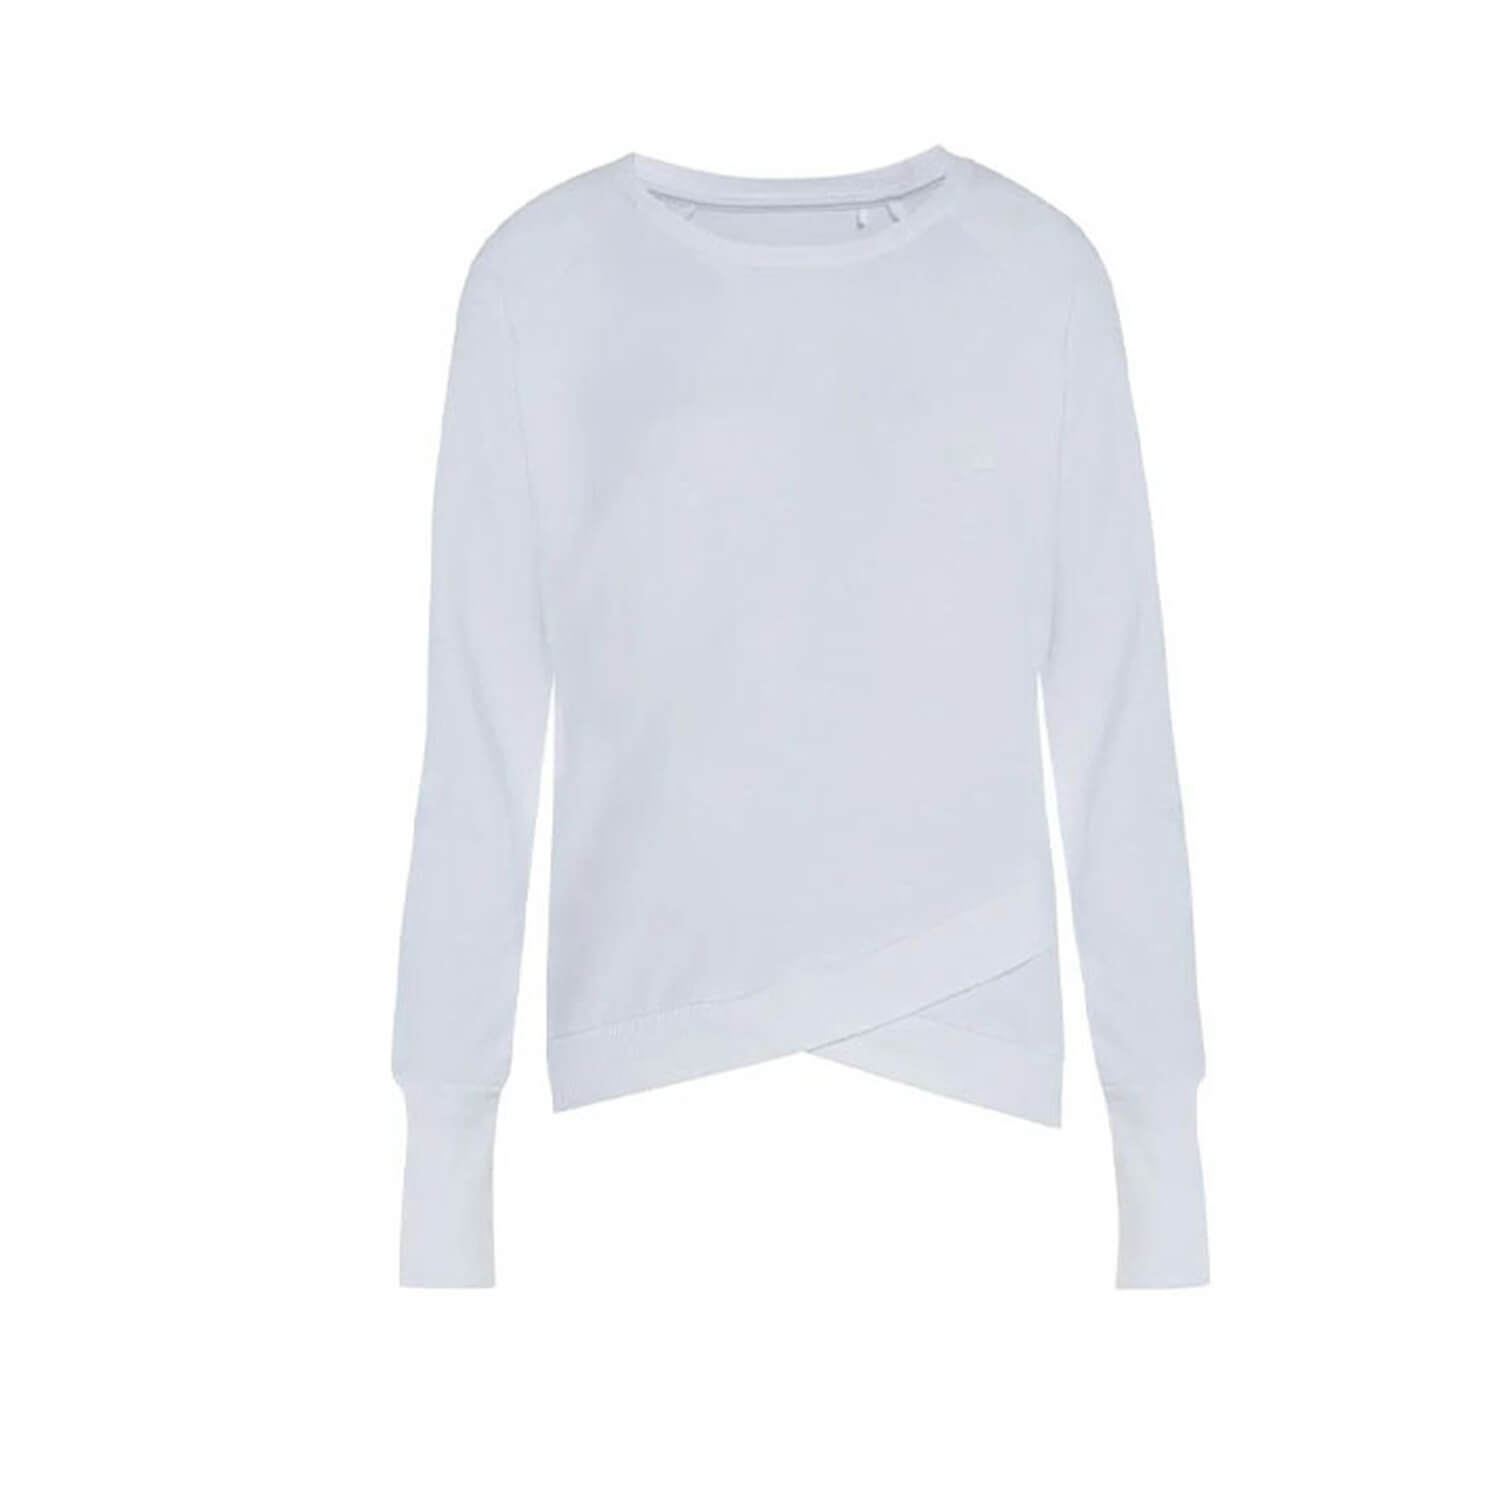 New Balance Lifestyle Beyaz Kadın Sweatshirt - WTC3741-WT